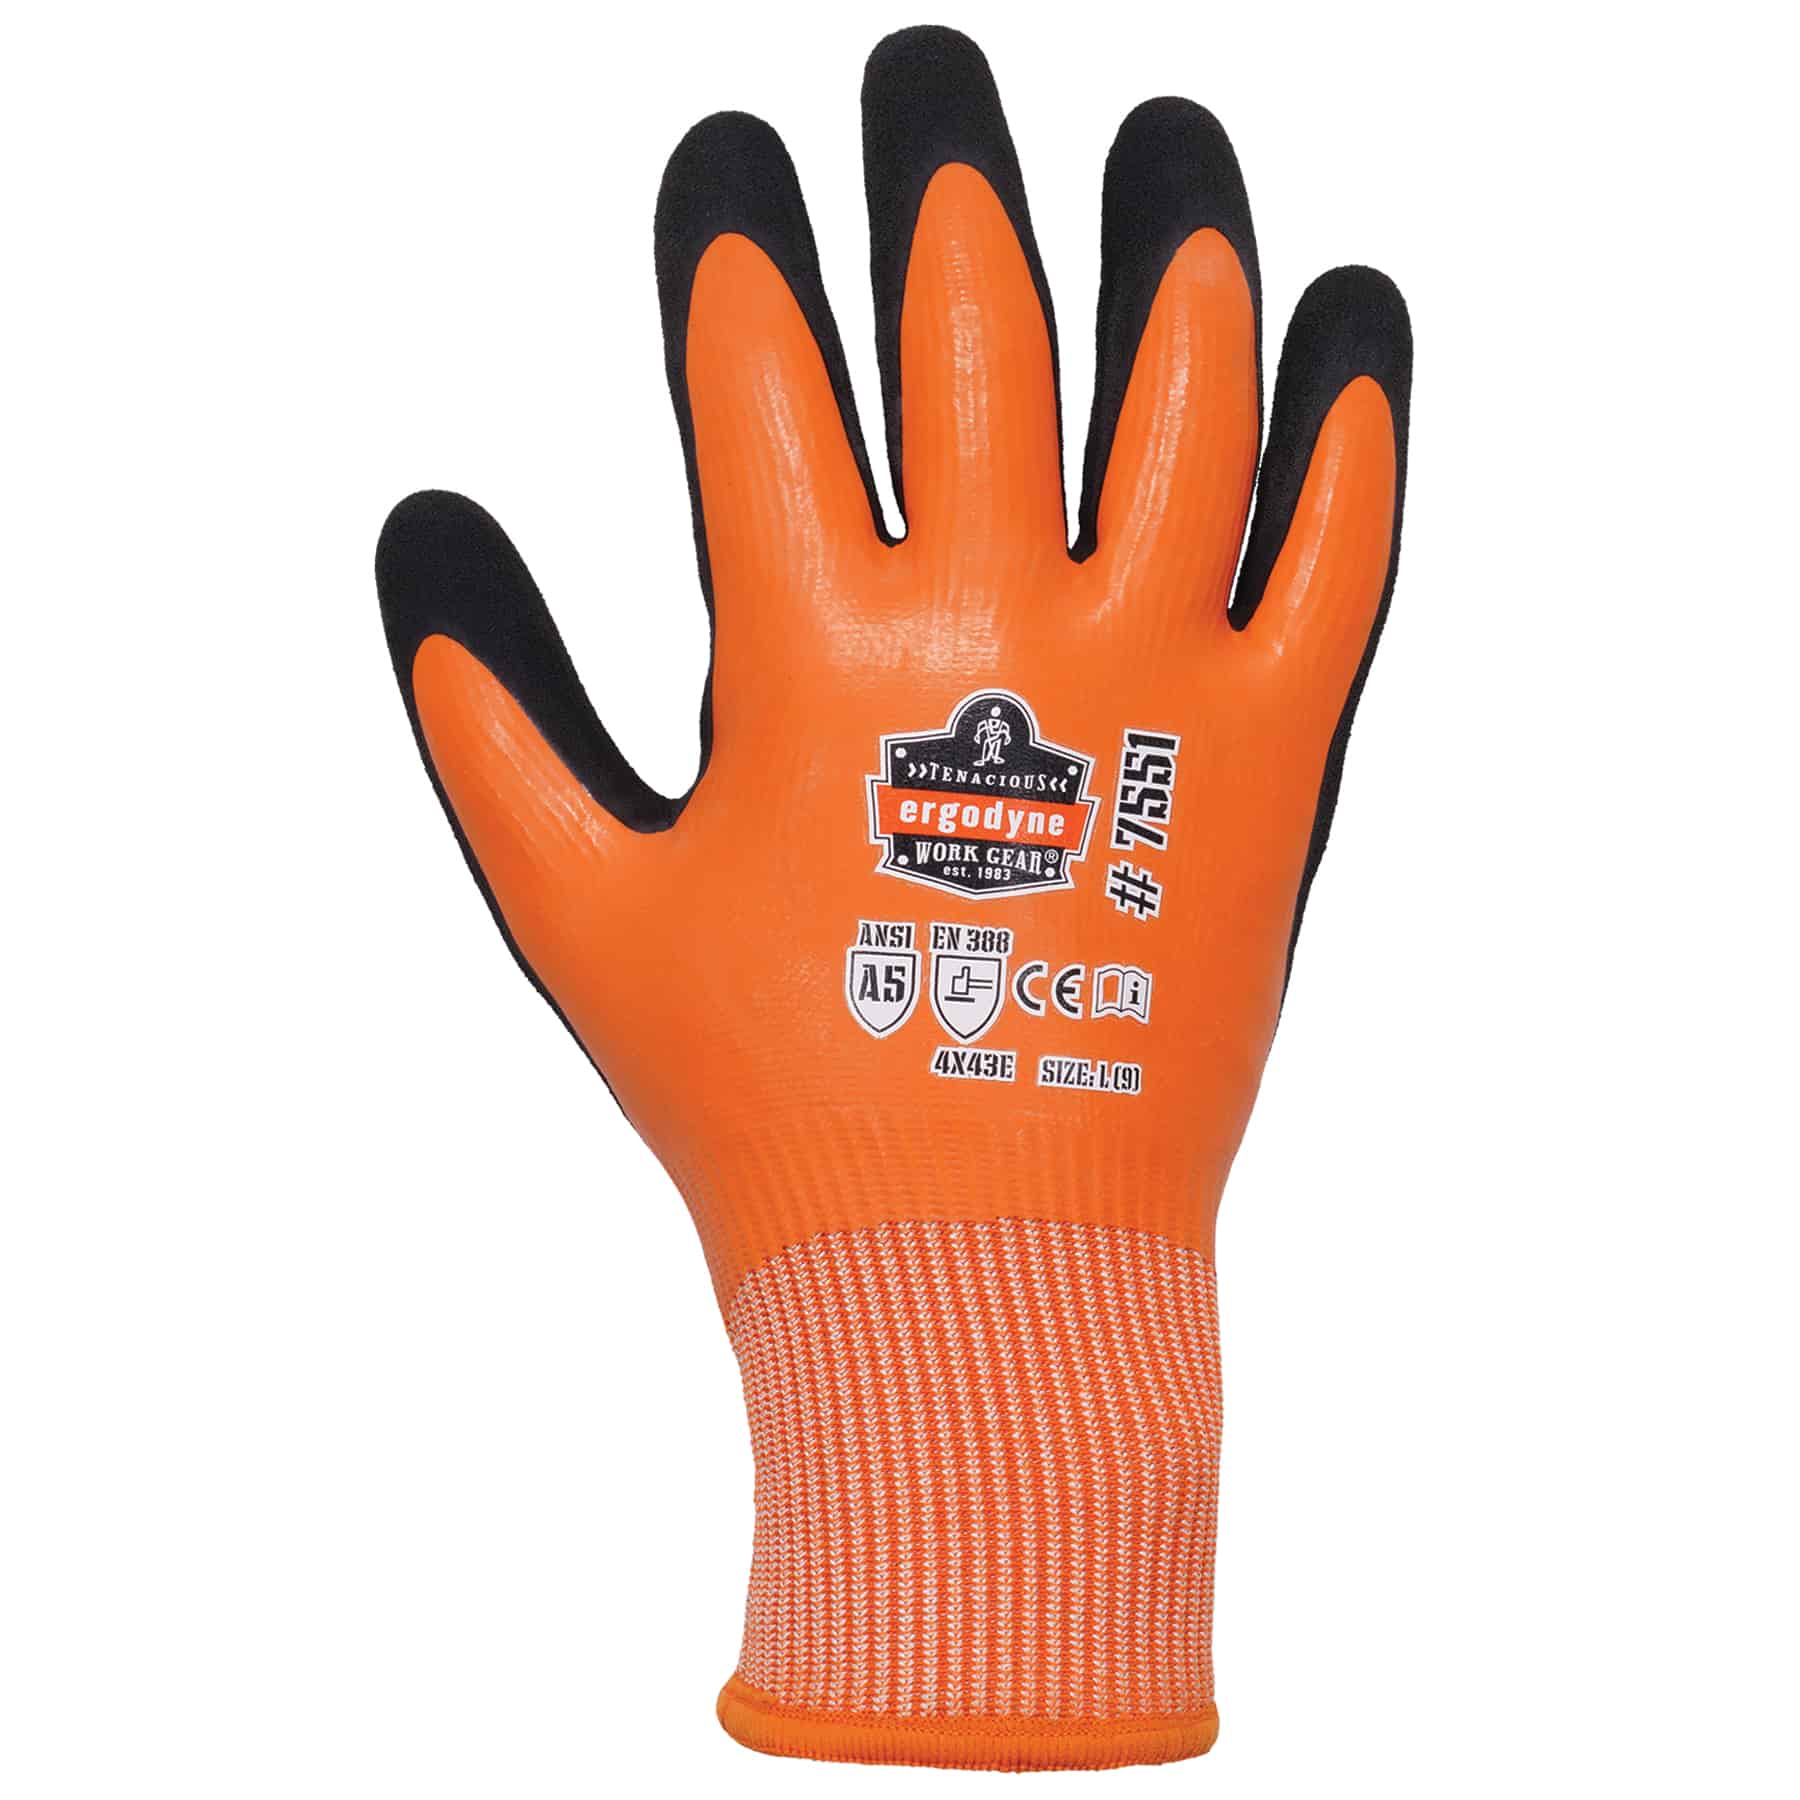 AWP Cut Resistant Work Gloves